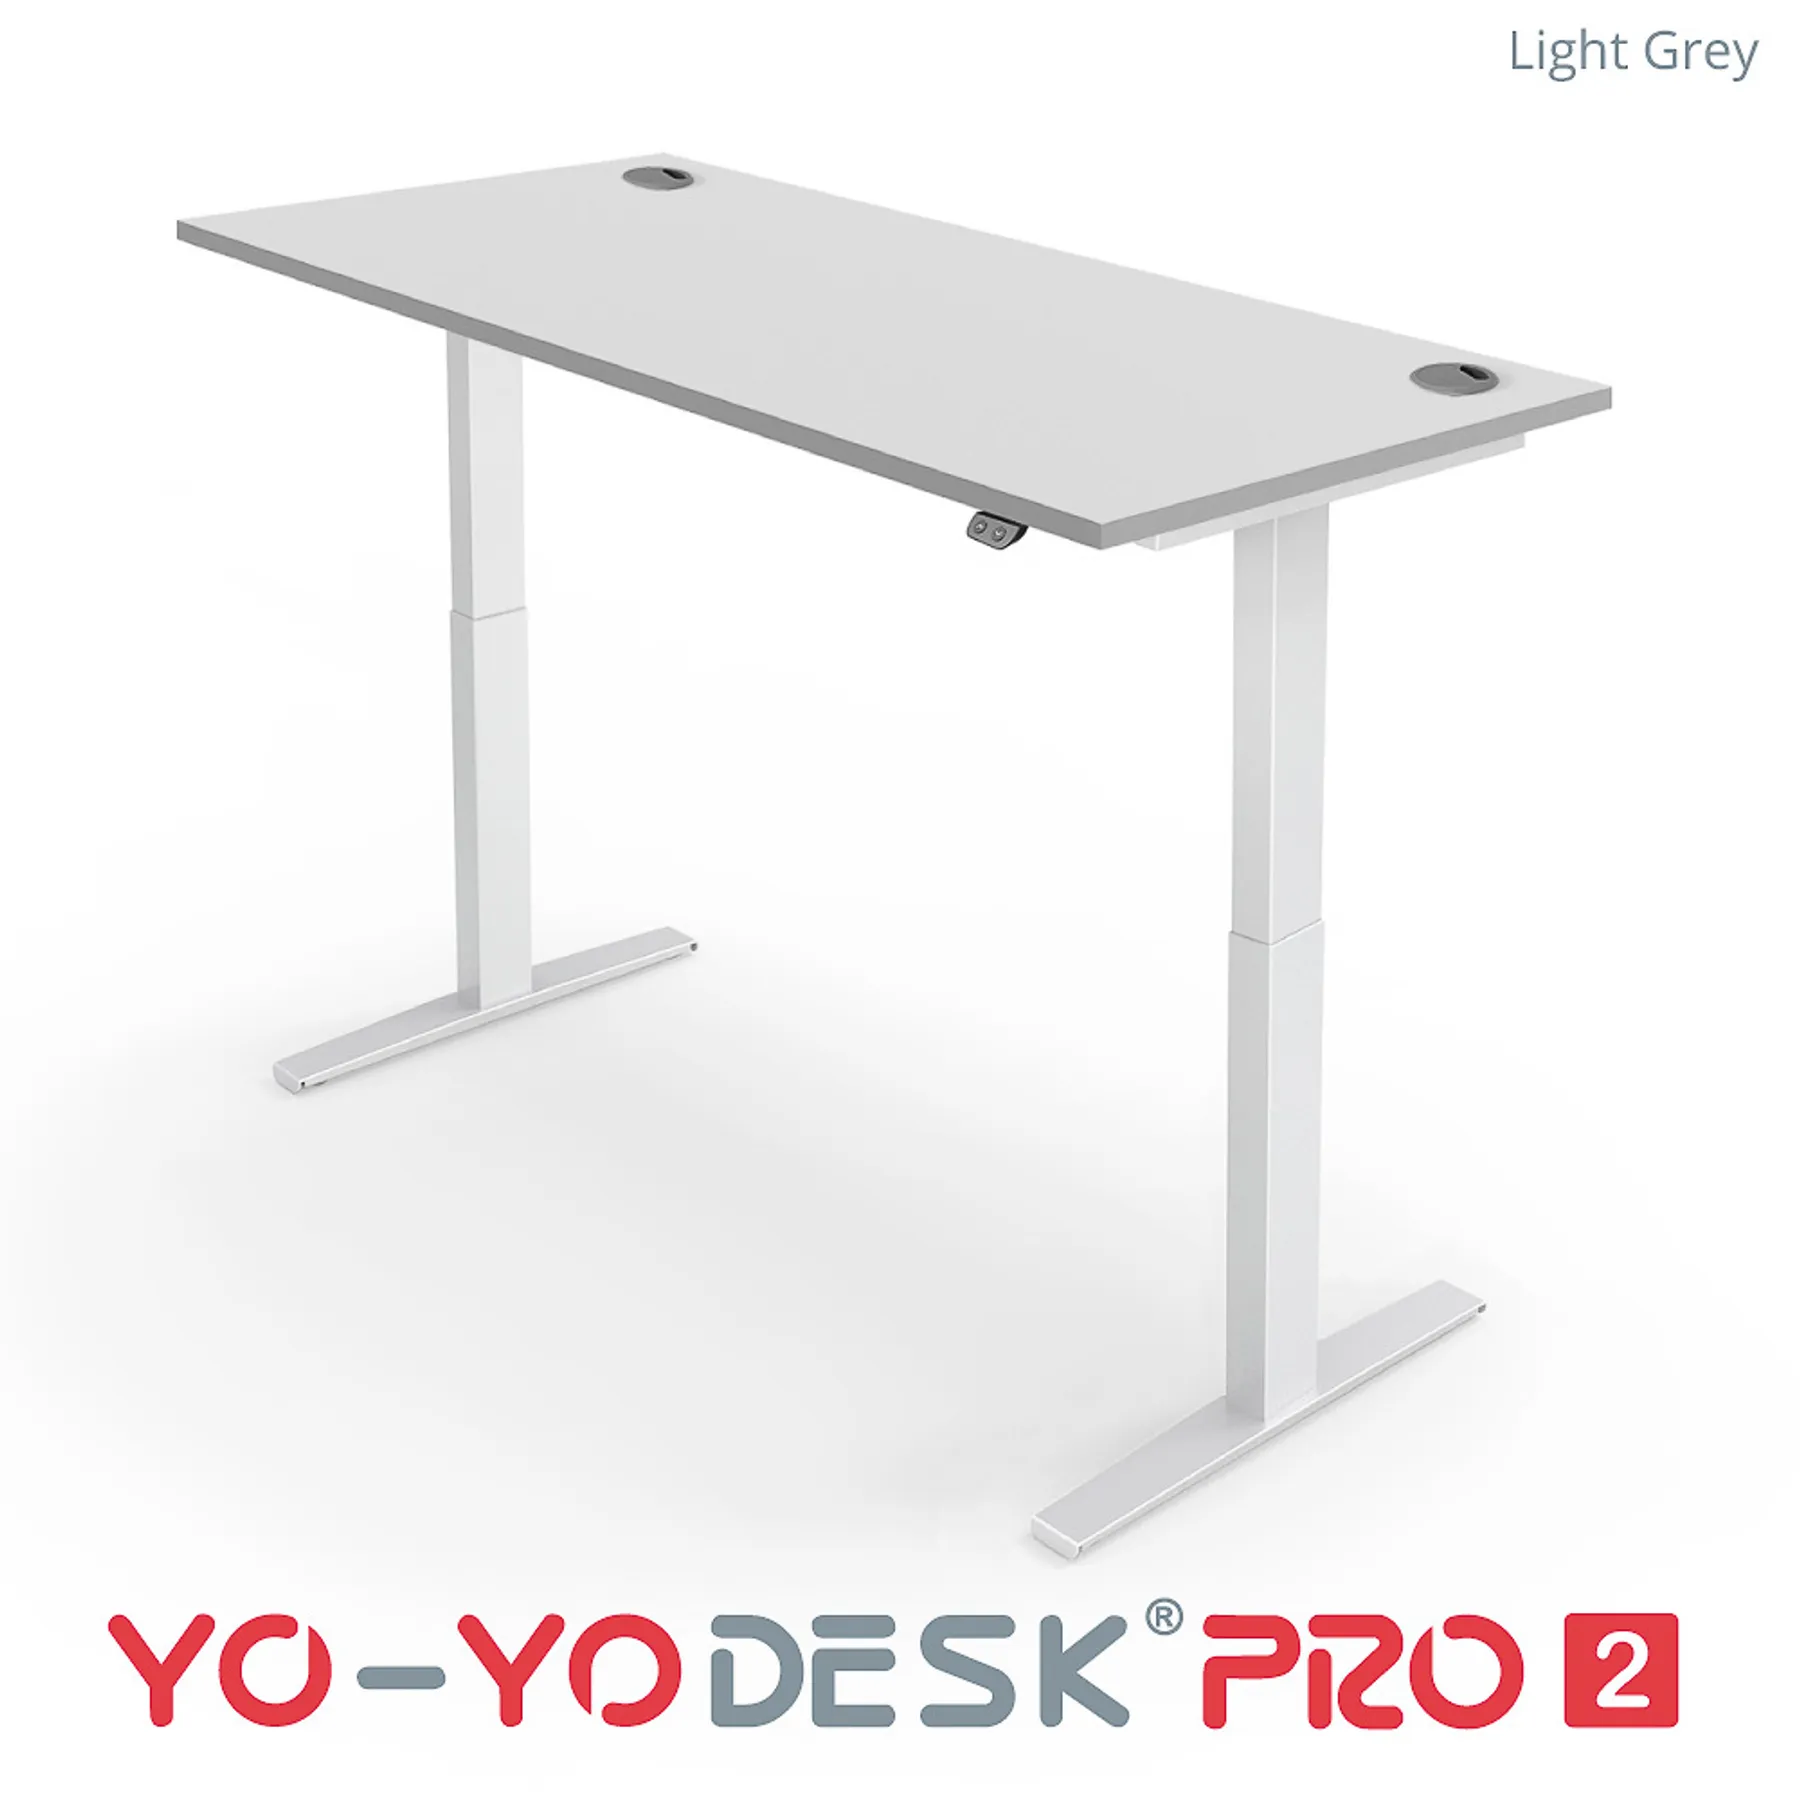 Lof direct yoyo desk pro 2 White frame Light grey top